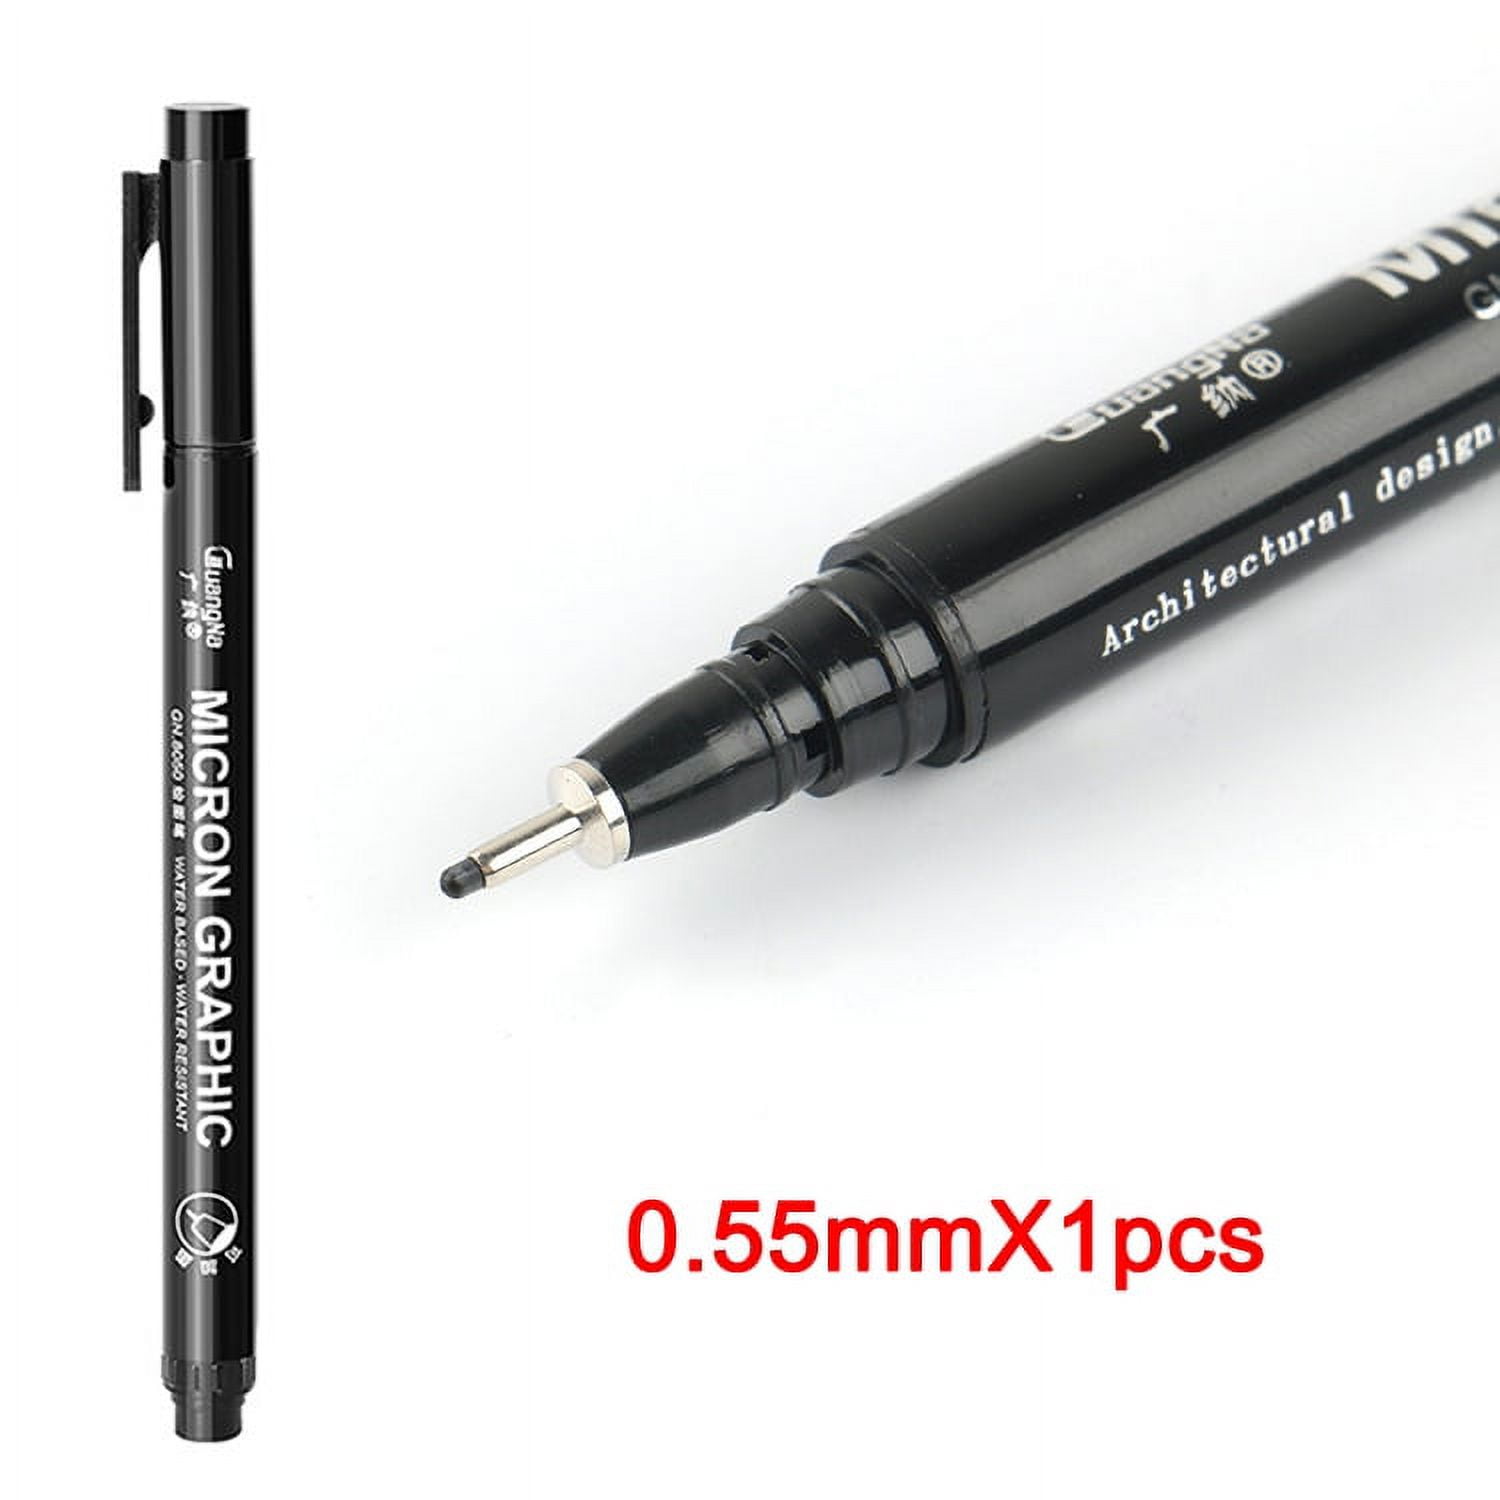 Micro Fineliner Drawing Art Pens 12 Black Fine Line Waterproof Ink Set  Artist